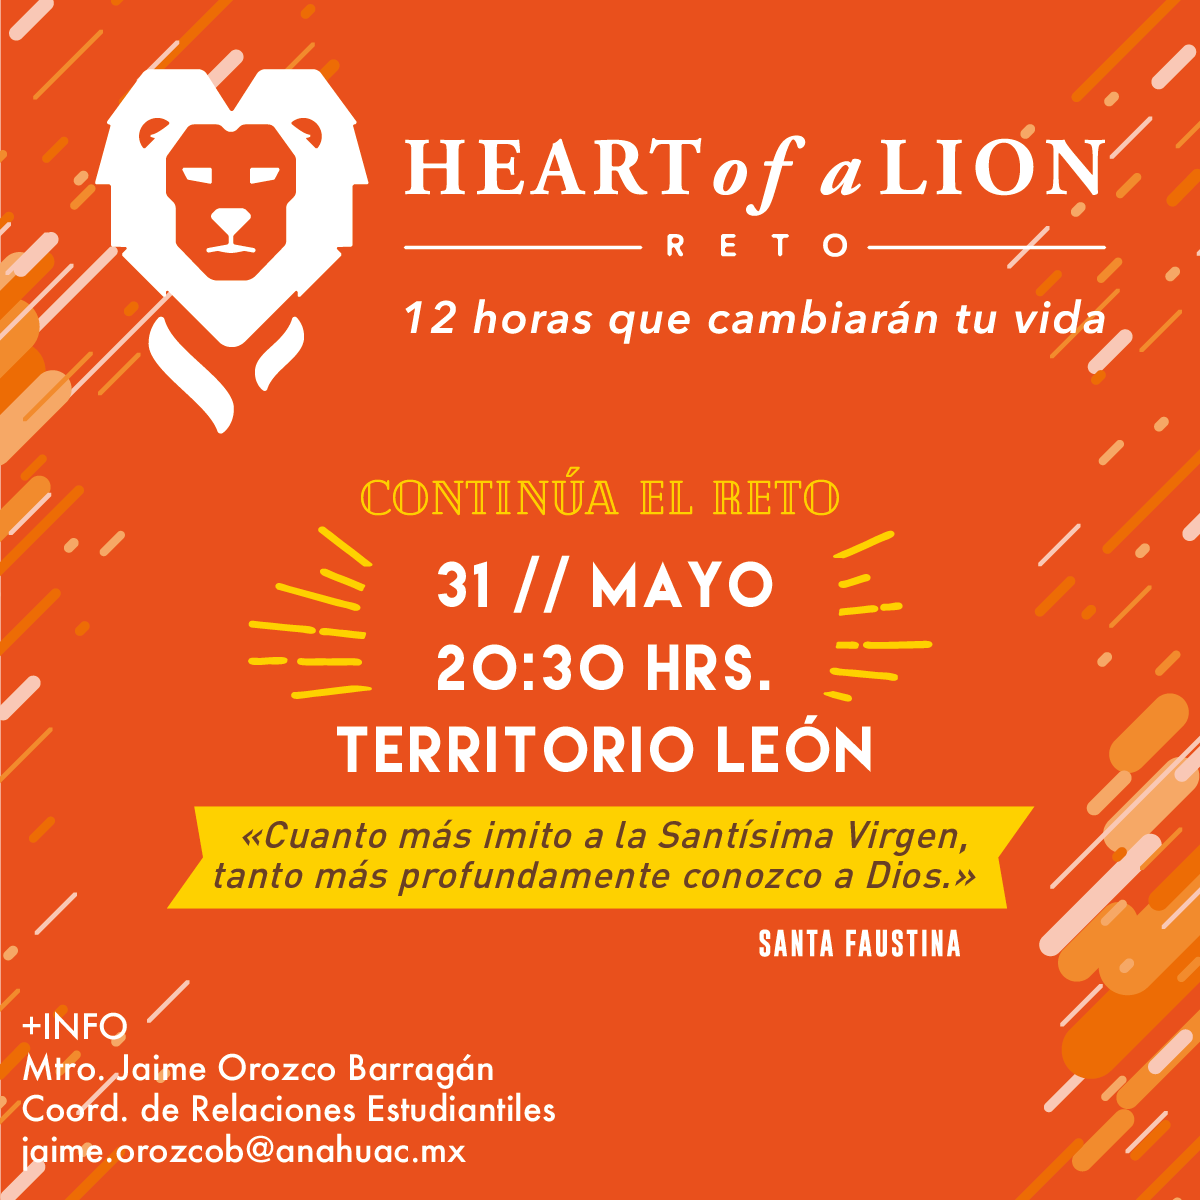 Reto Heart of a Lion: Quinta Actividad